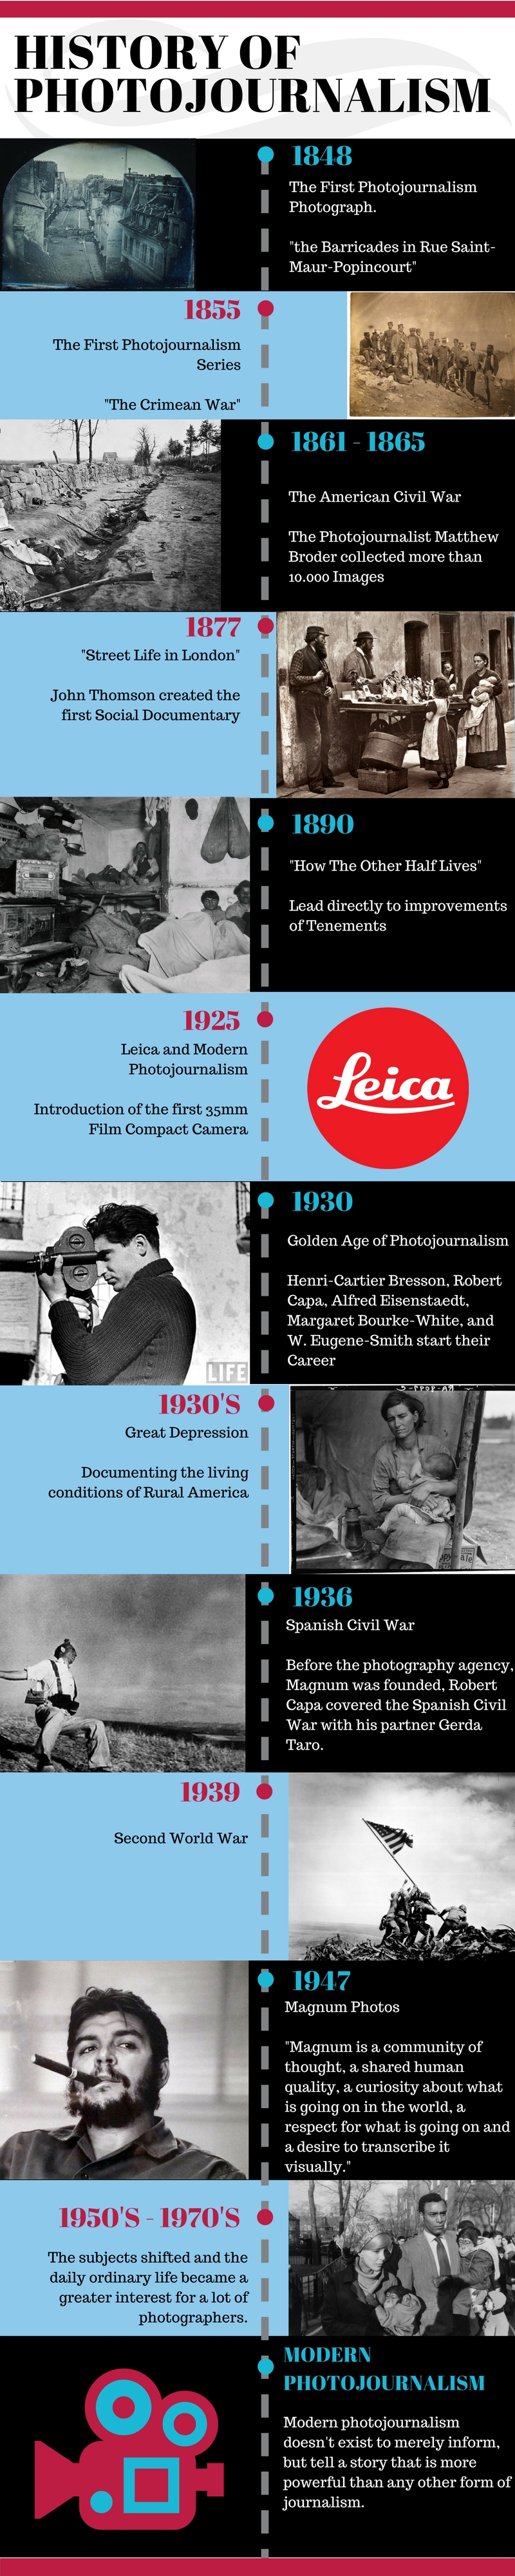 History of Photojournalism Timeline new